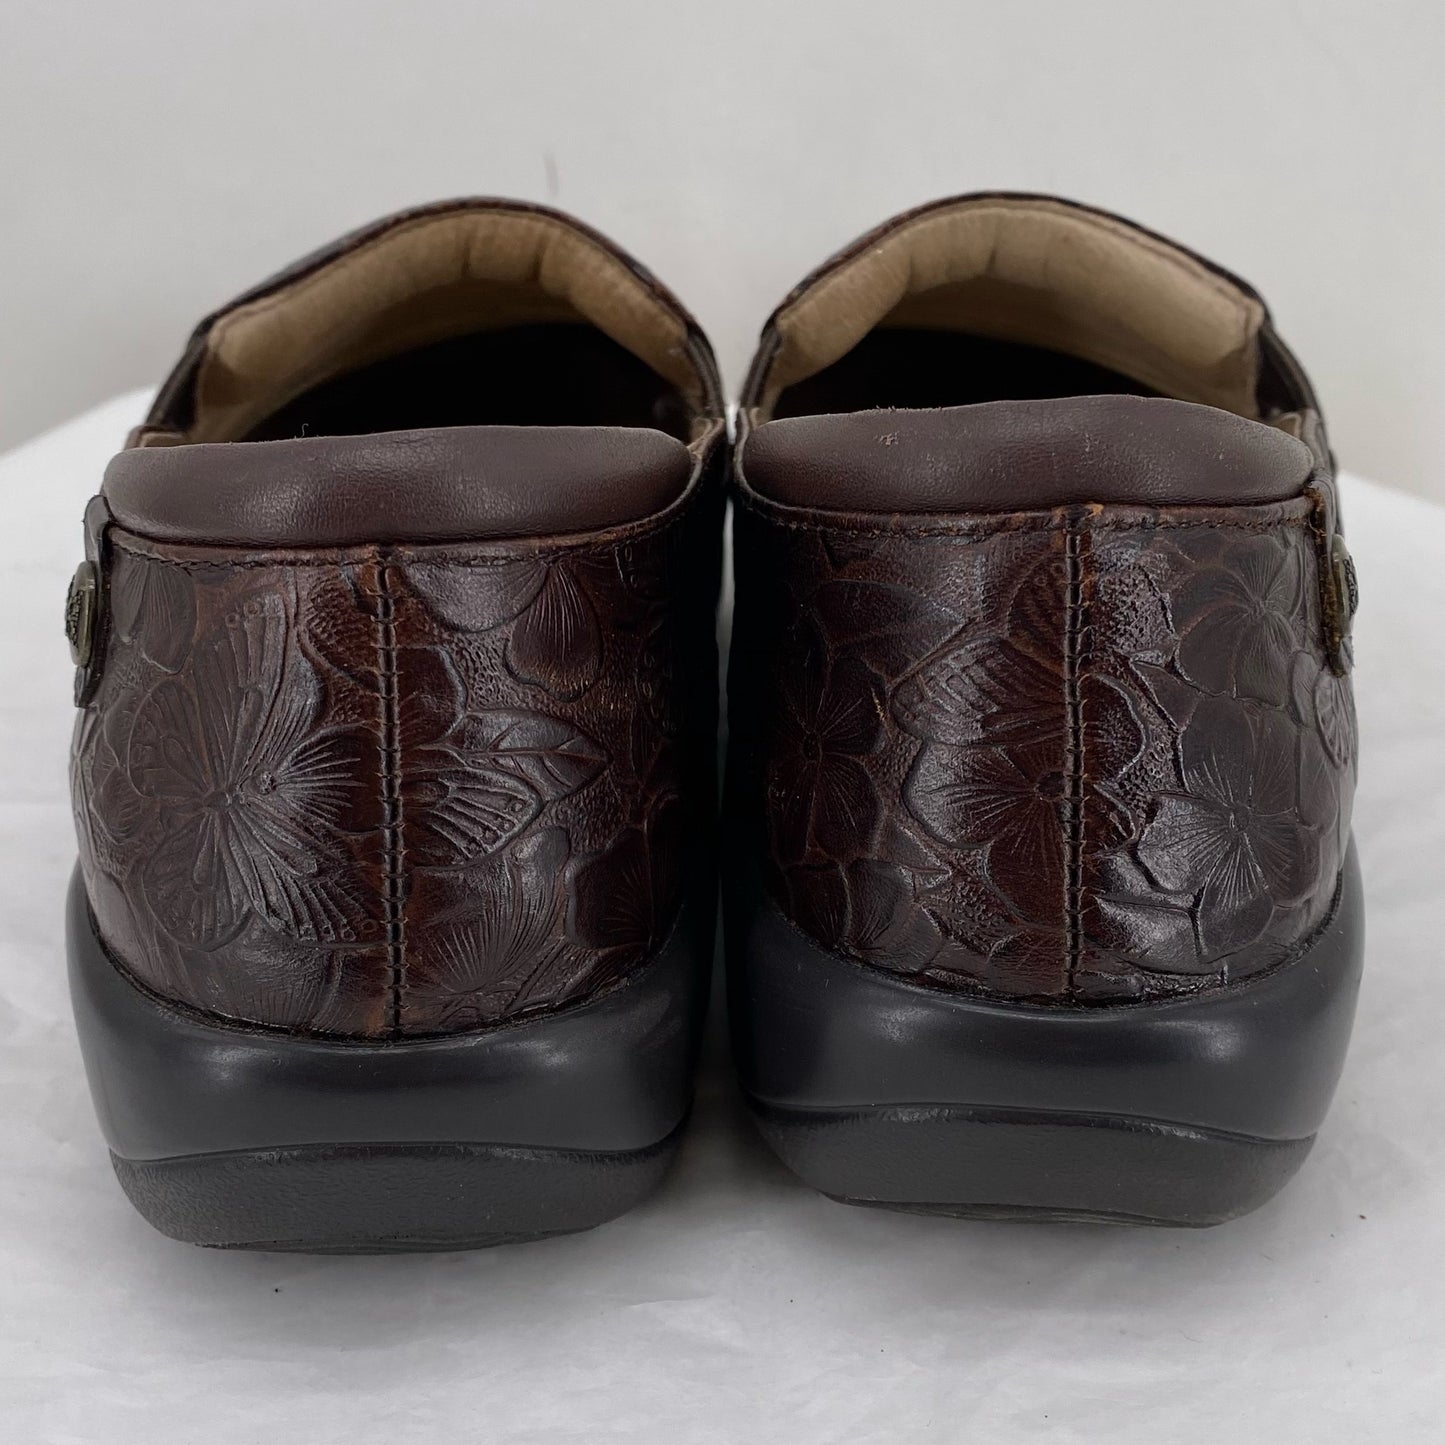 BROWN W Shoe Size 39 ALEGRIA Flats